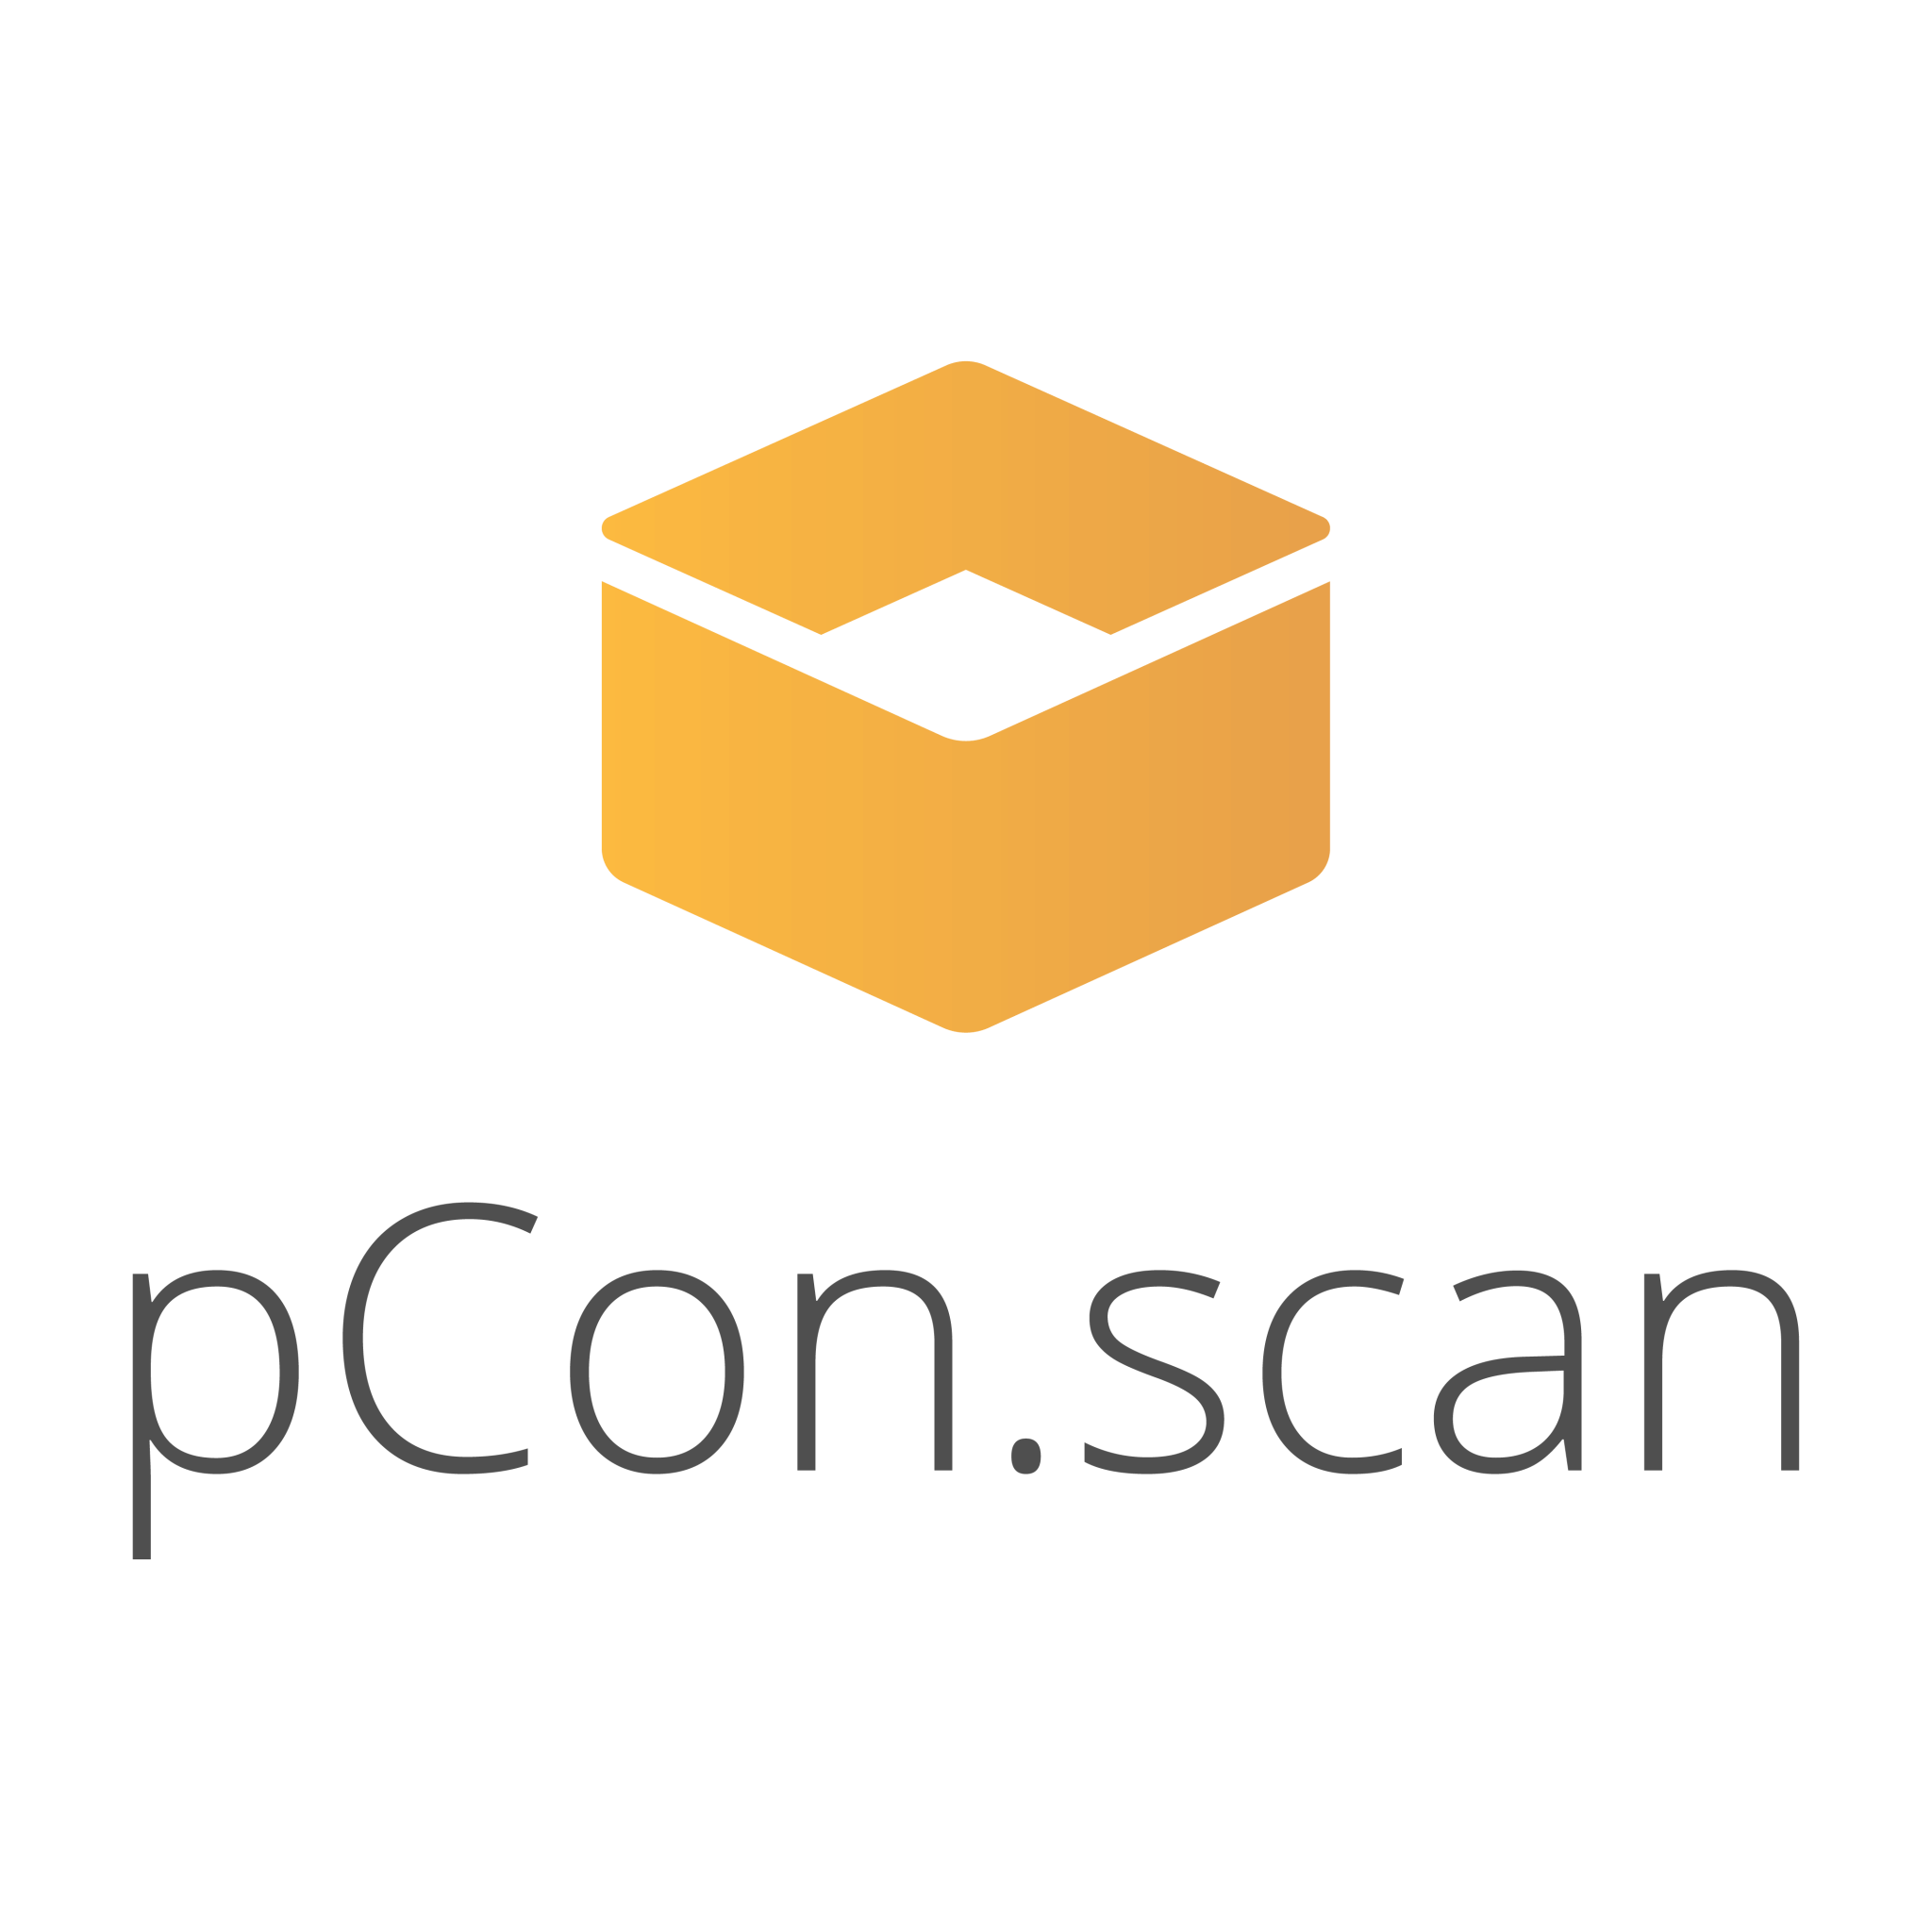 pcon.scan logo room scanner tool